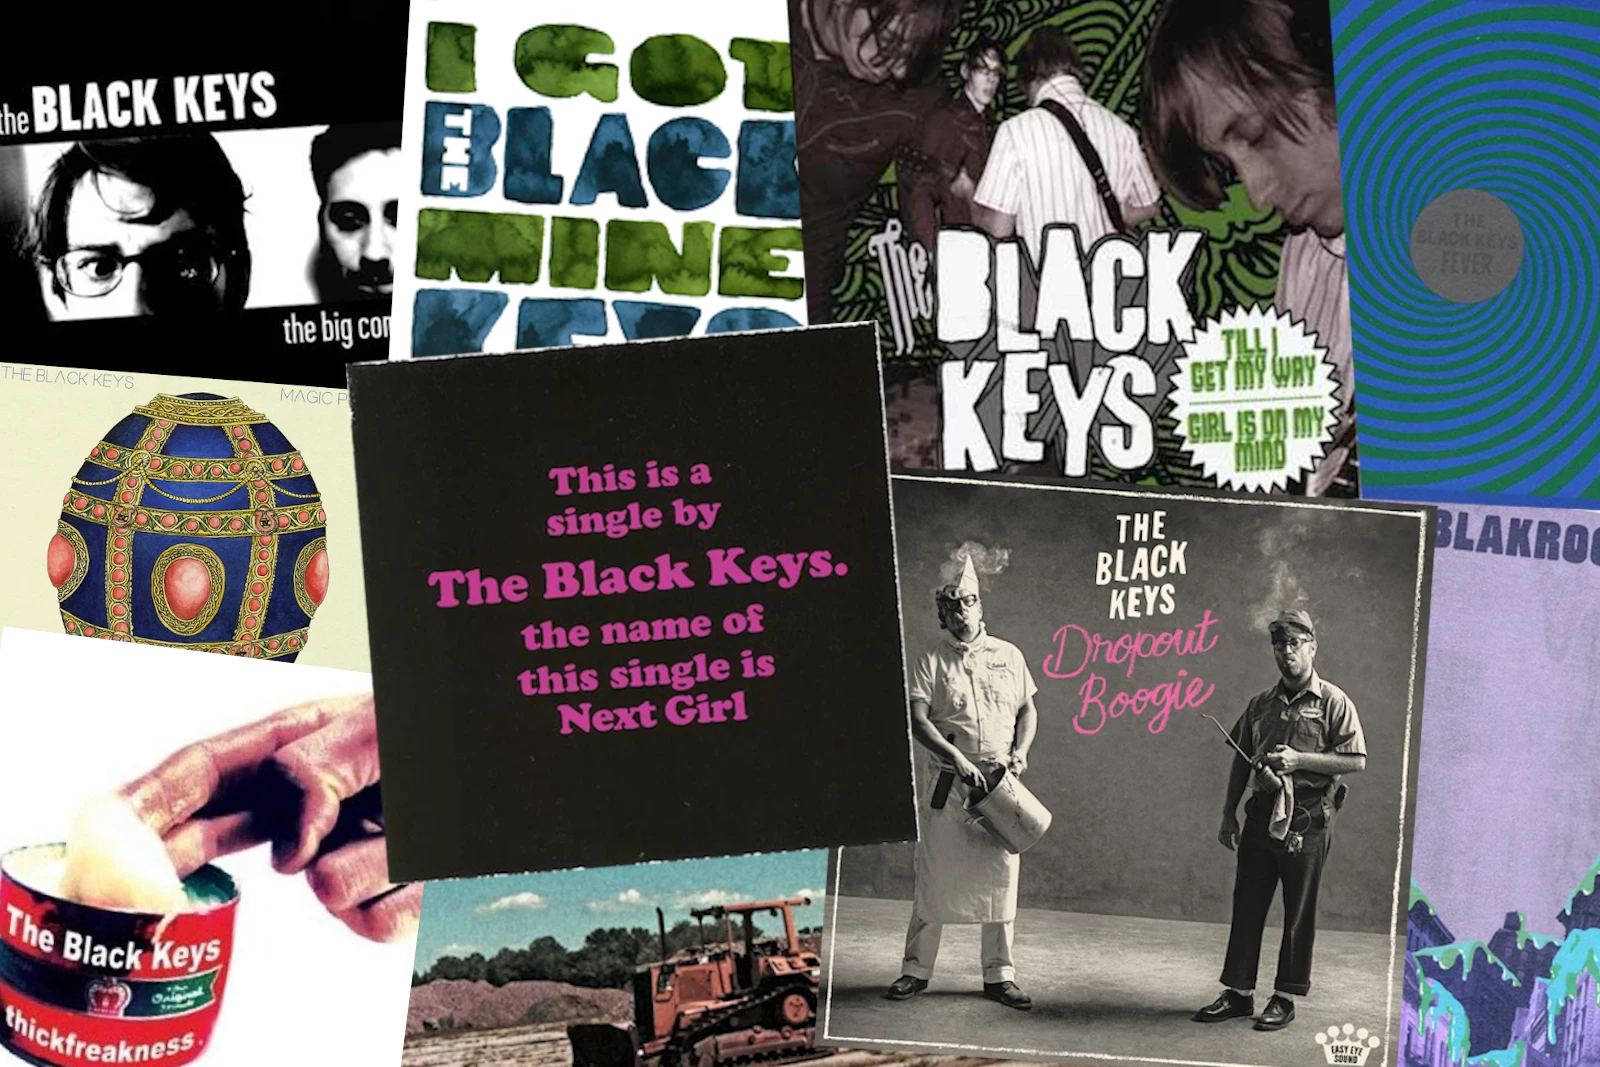 New Releases: The Black Keys still have groove, Black Keys 